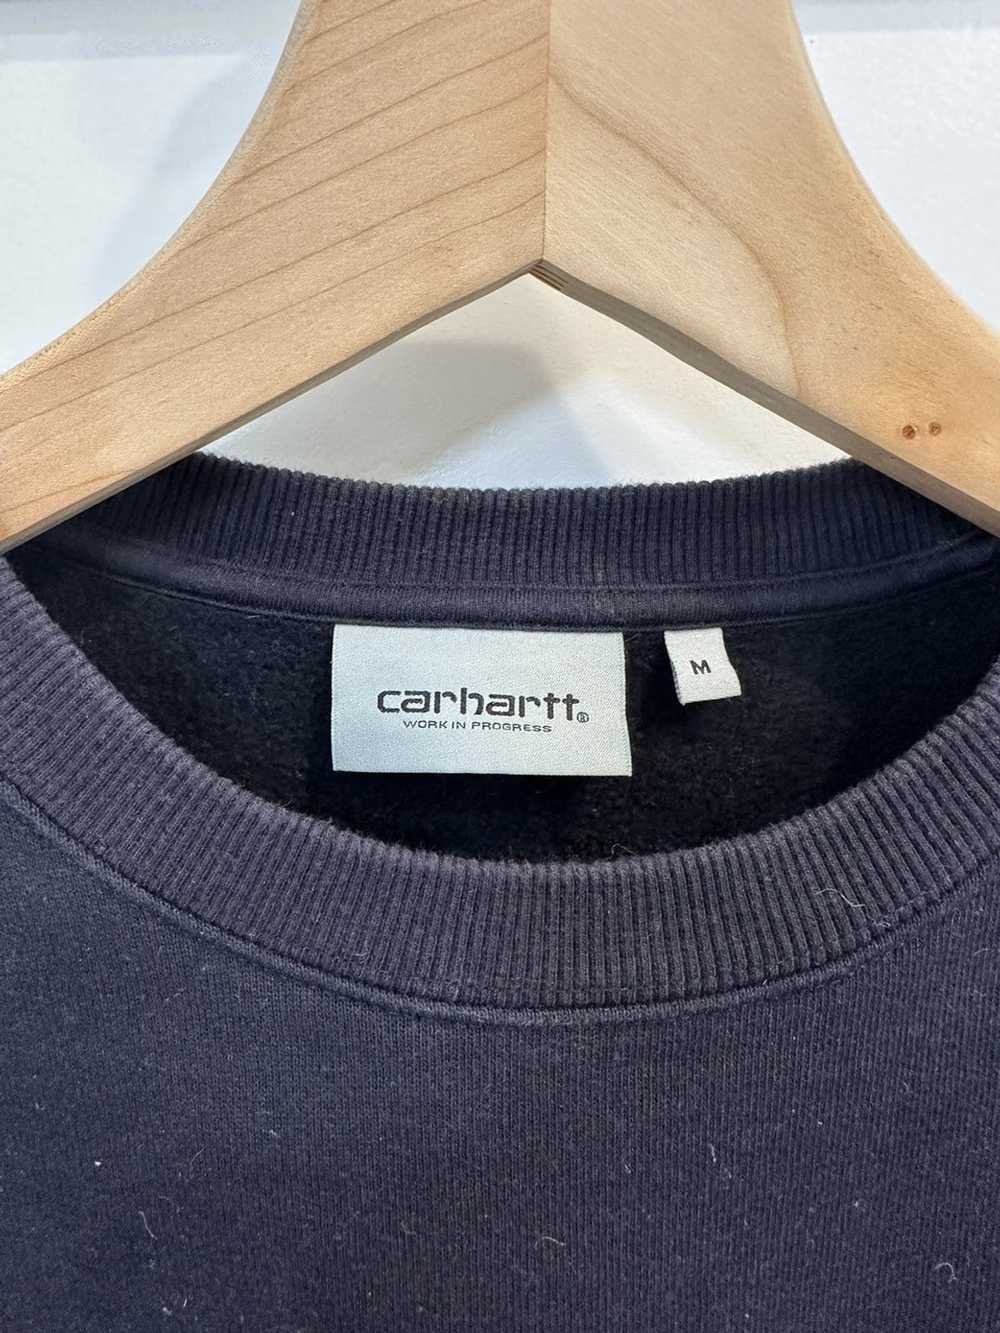 Carhartt Wip Carhartt WIP sweatshirt - image 2